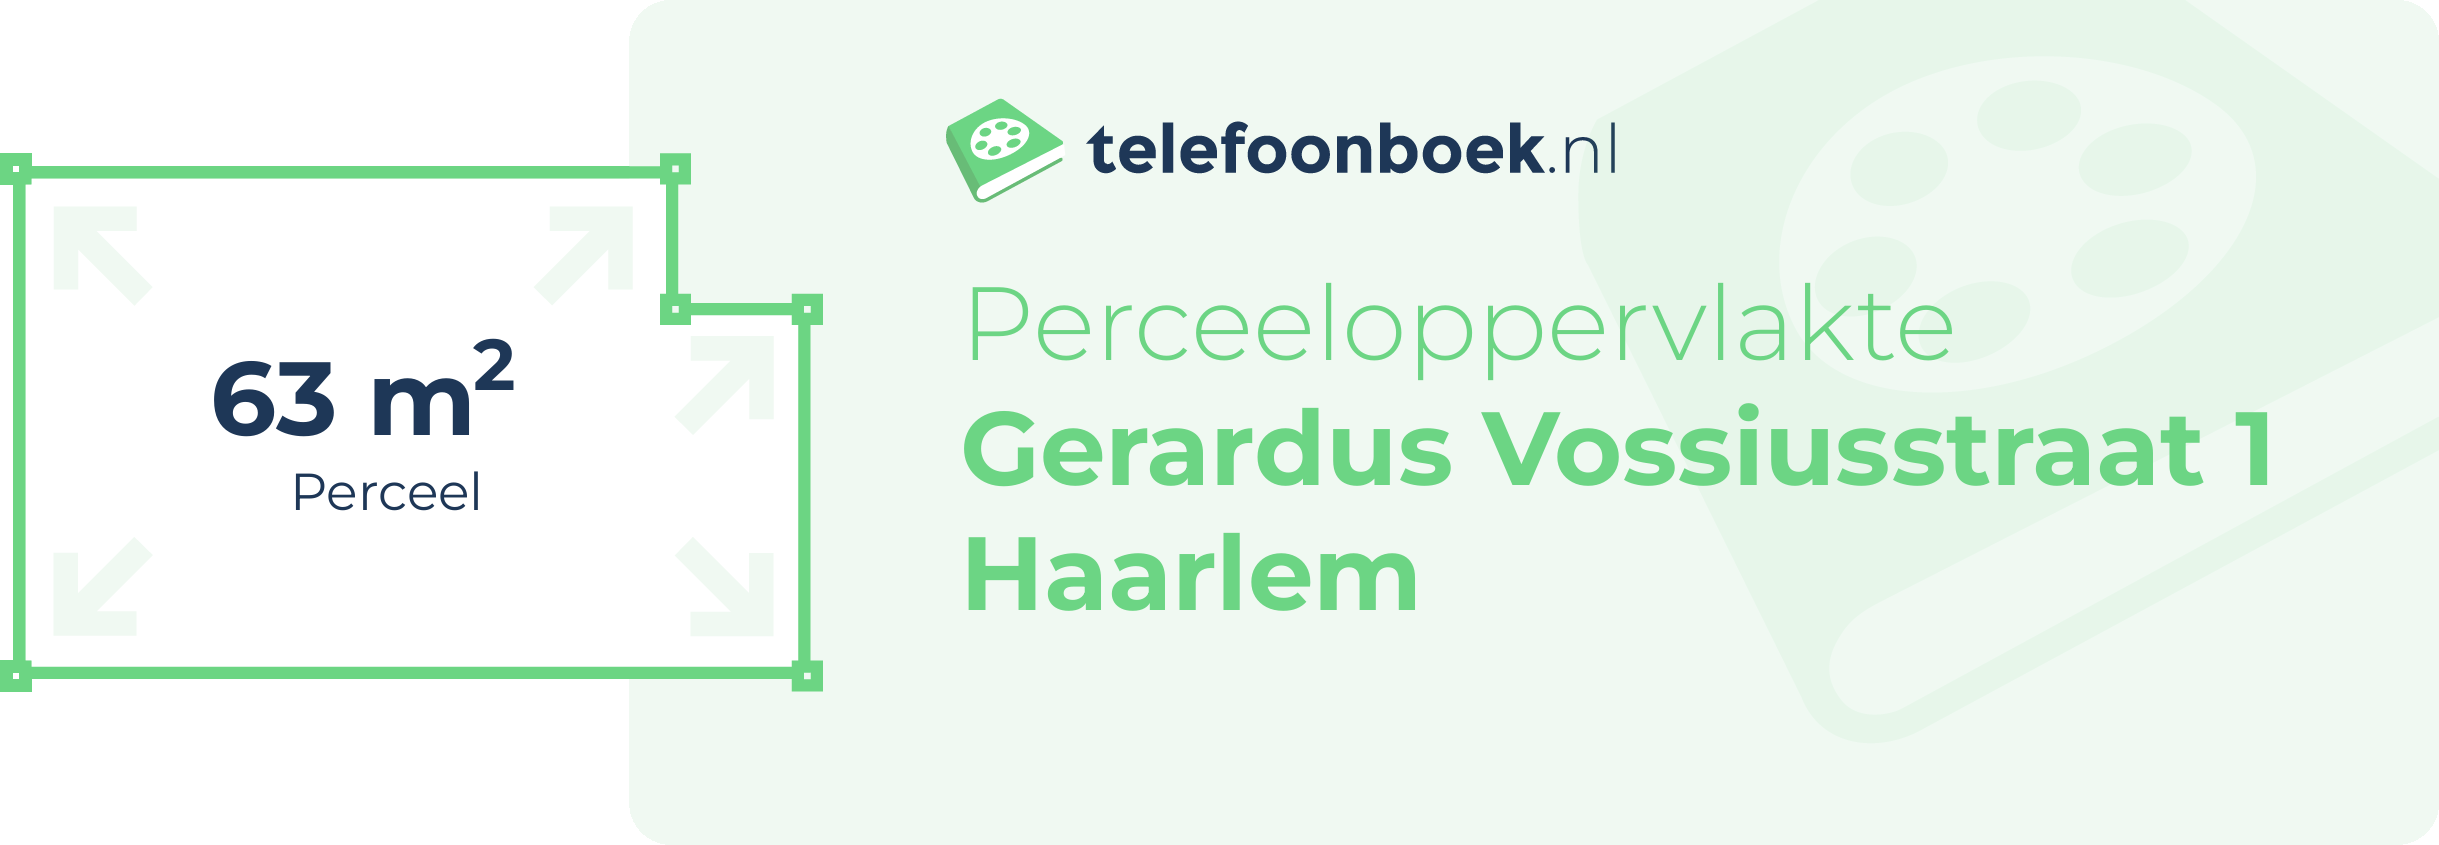 Perceeloppervlakte Gerardus Vossiusstraat 1 Haarlem